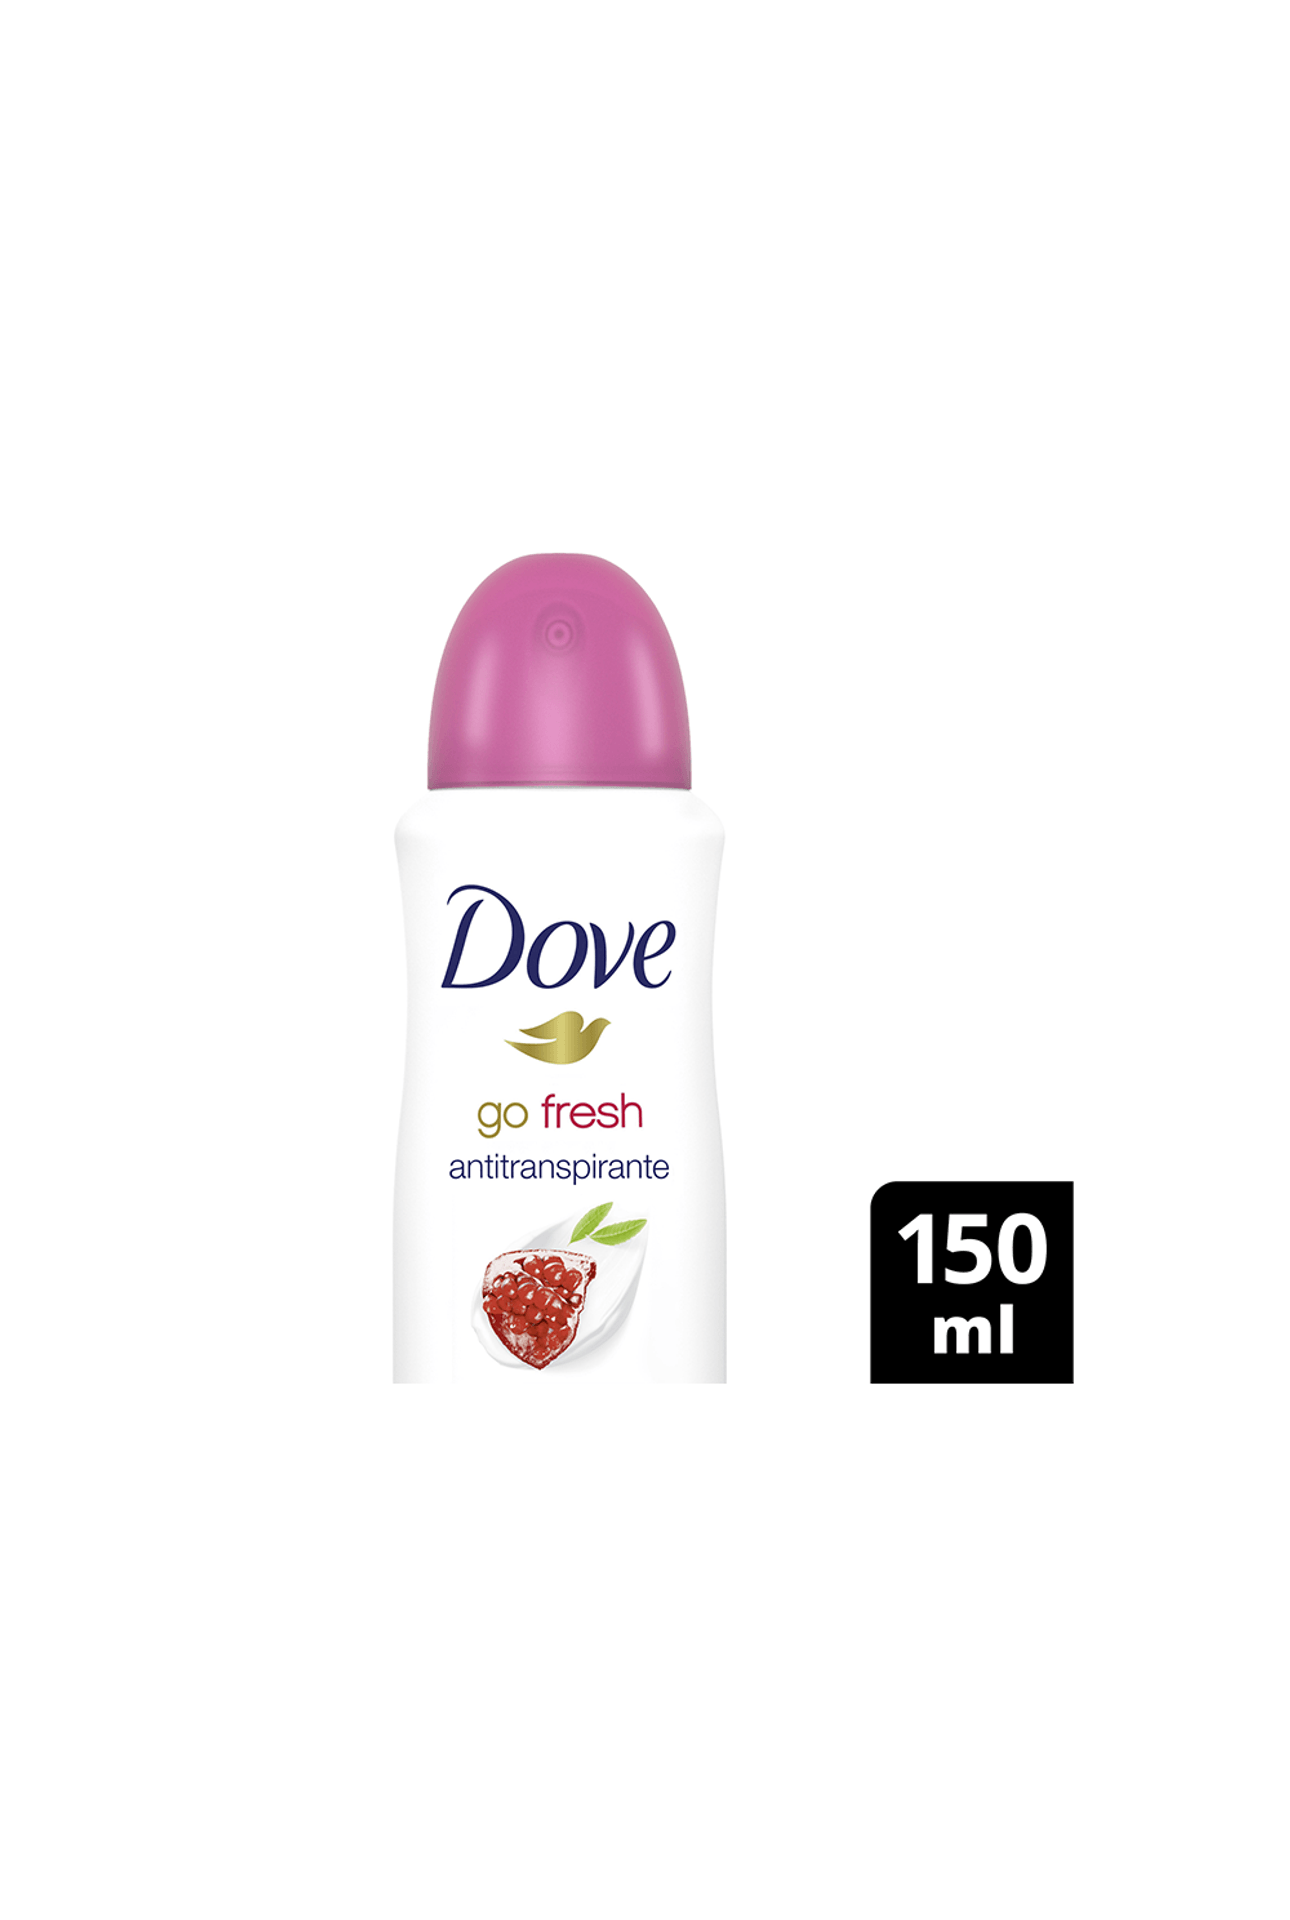 Dove-Antitranspirante-Dove-Go-Fresh-Granada-x-150ml-7791293048499_img1